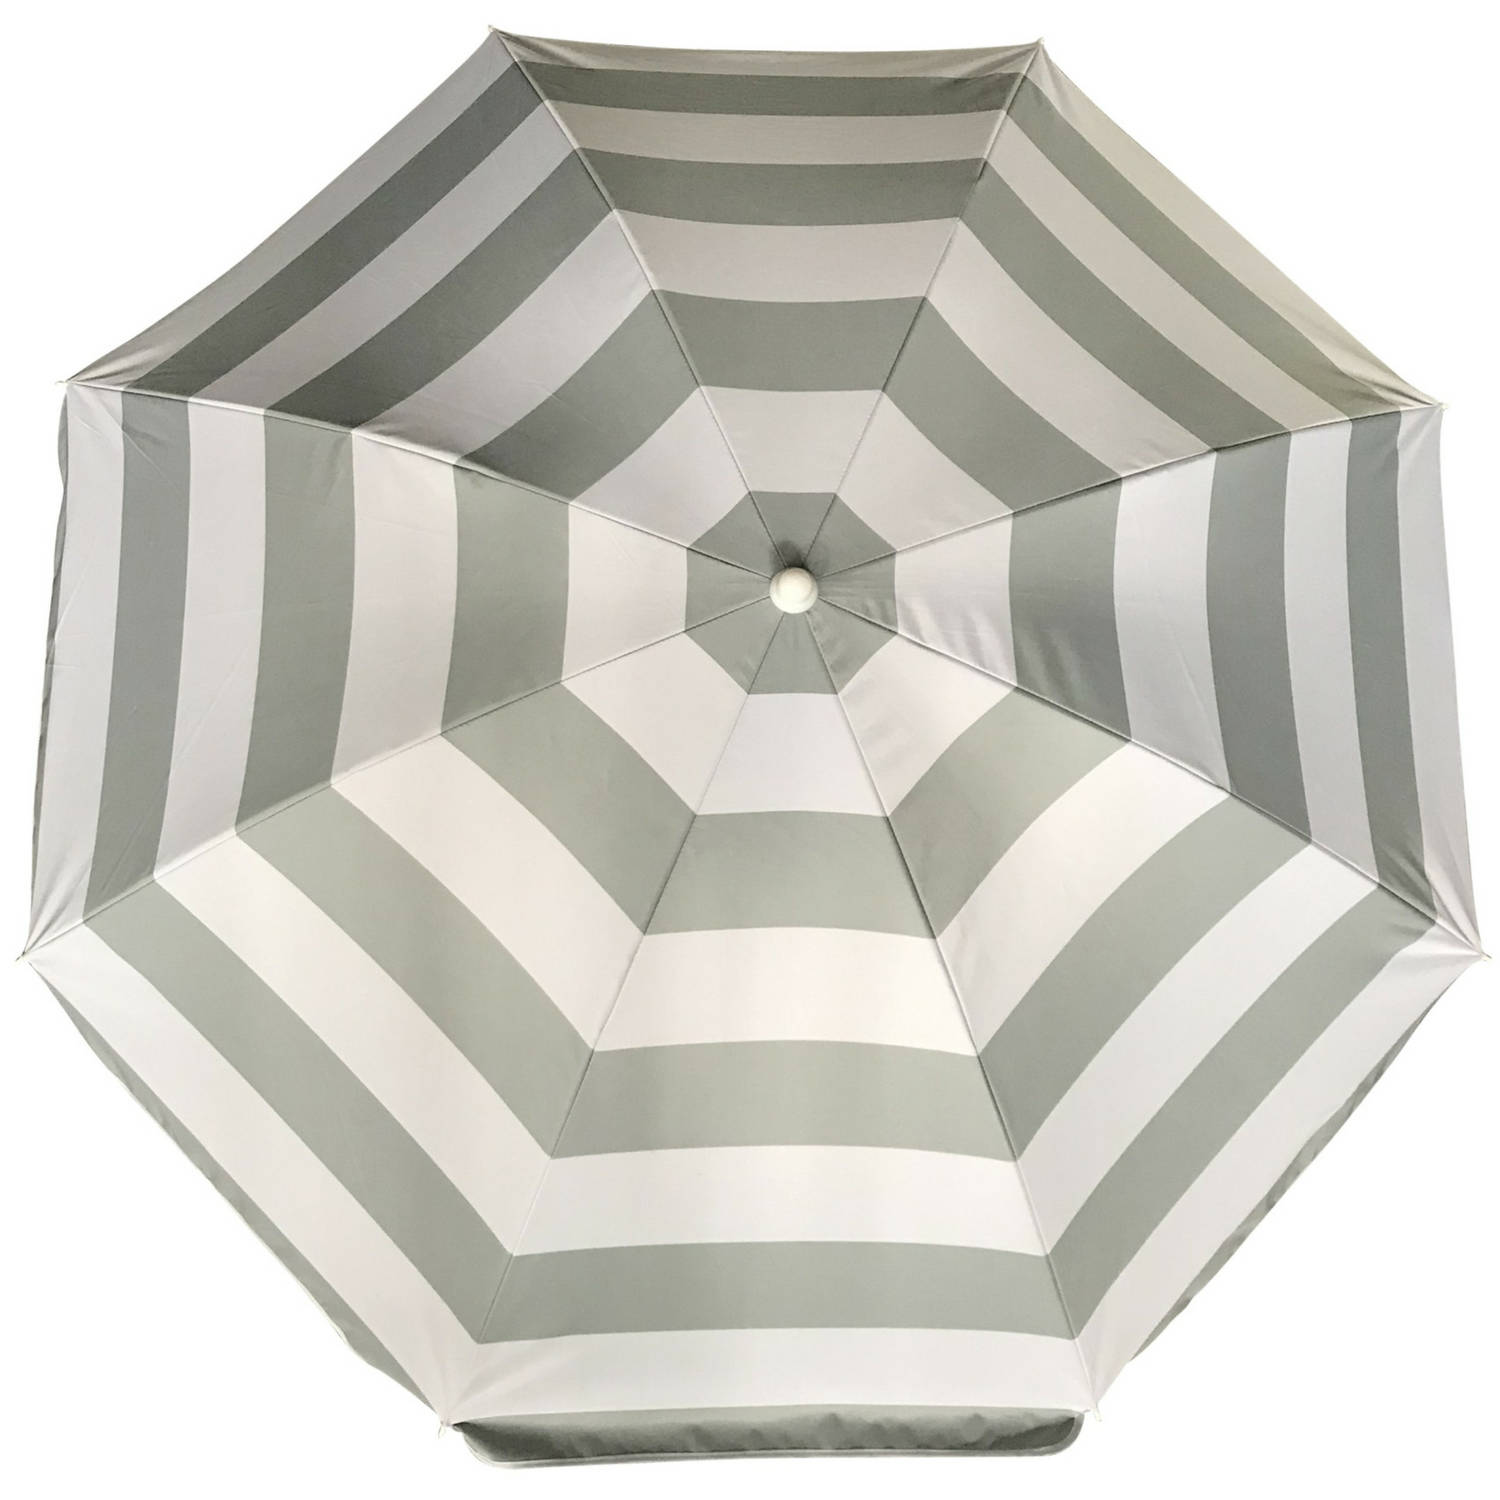 Parasol zilver-wit gestreept D200 cm UV-bescherming incl. draagtas Parasols